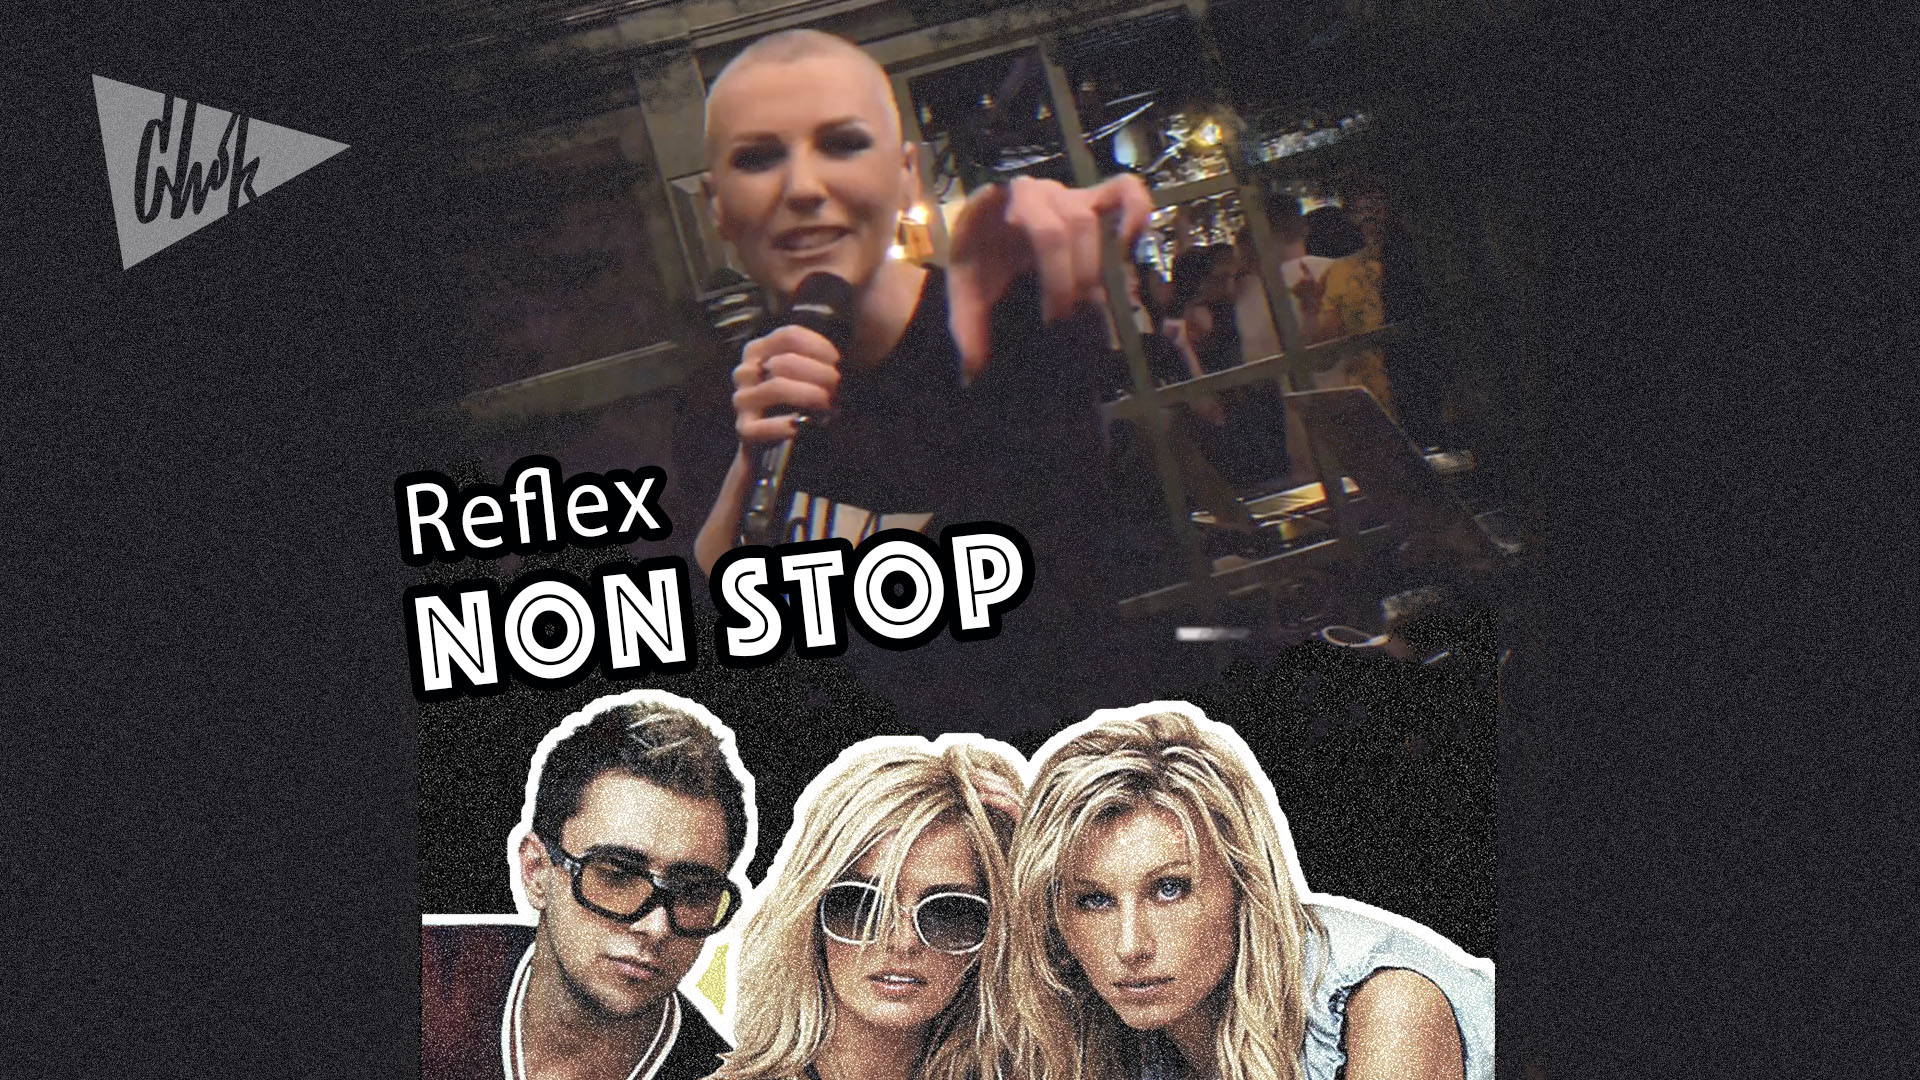 Рефлекс мне трудно. Рефлекс нон стоп. Нон стоп рефлекс обложка. Non stop Reflex текст. Eurodance 1993 photos hq.